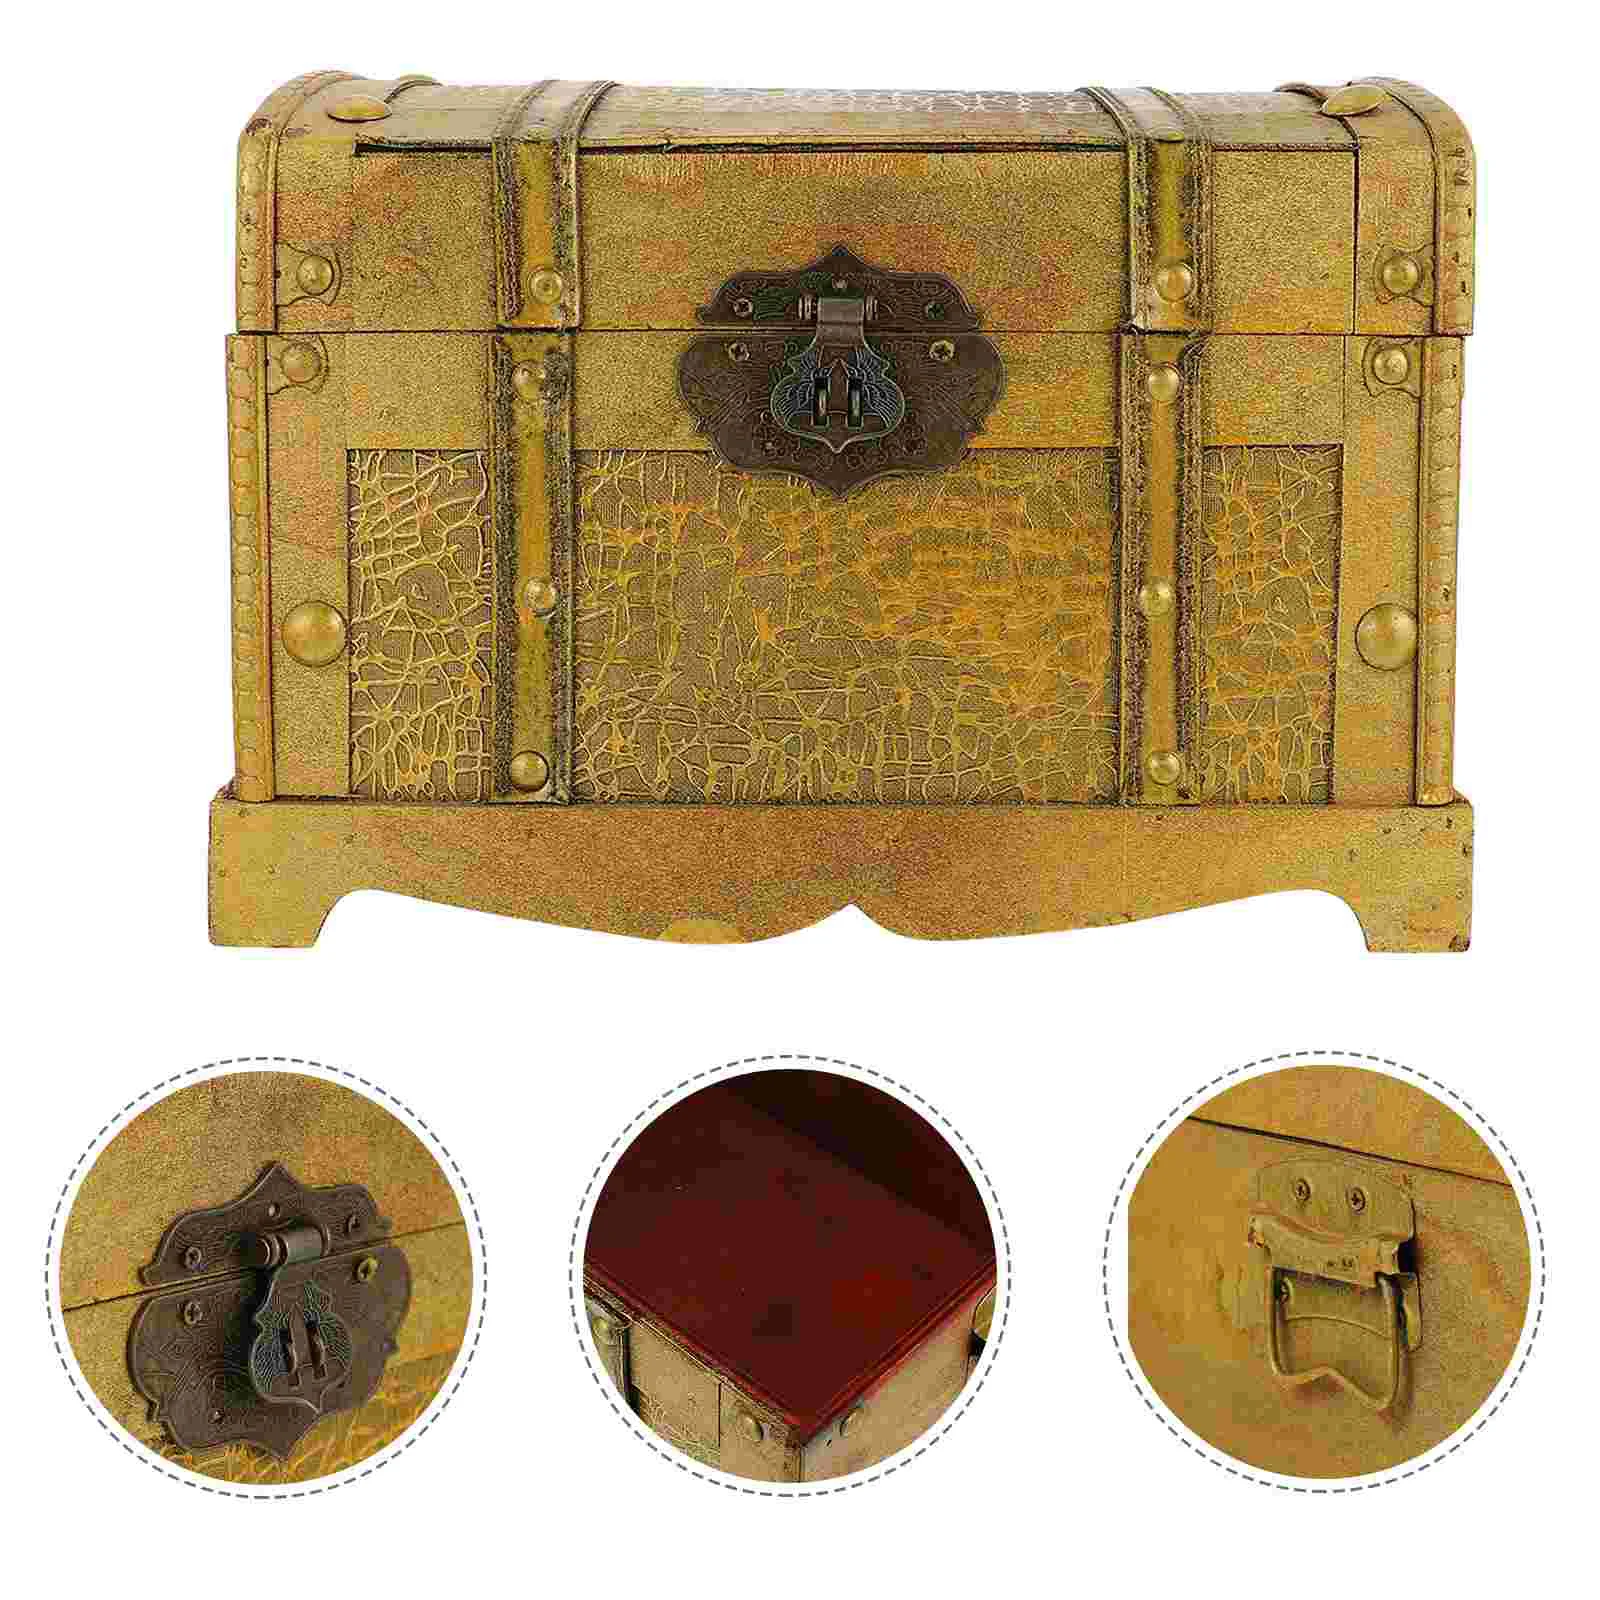 

Pirate Wooden Pirate Box Treasures Storage Box for Decorative Props Jewelry